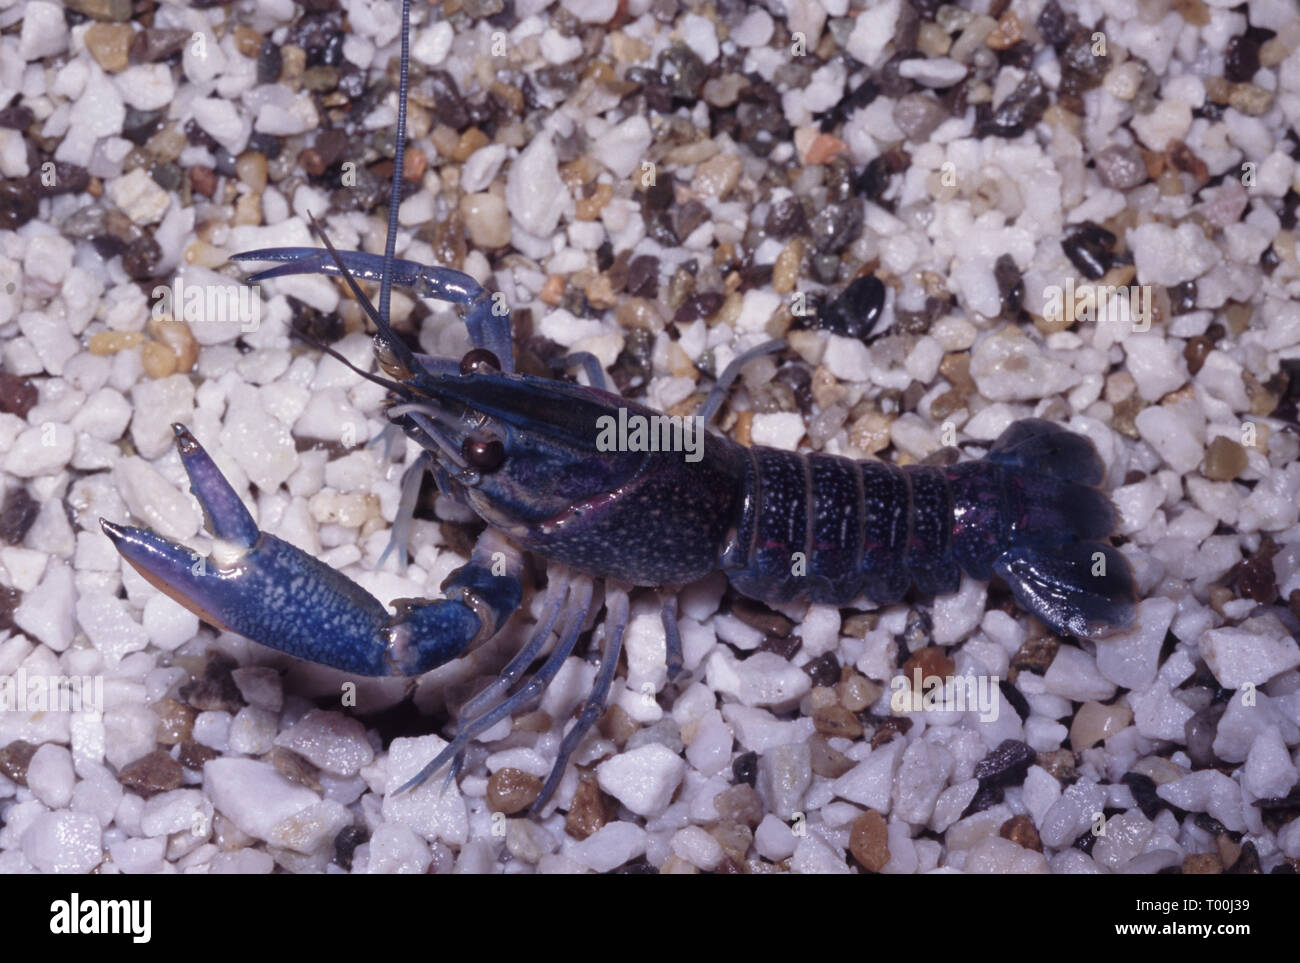 Florida or Blue crayfish (Procambarus alleni) Stock Photo